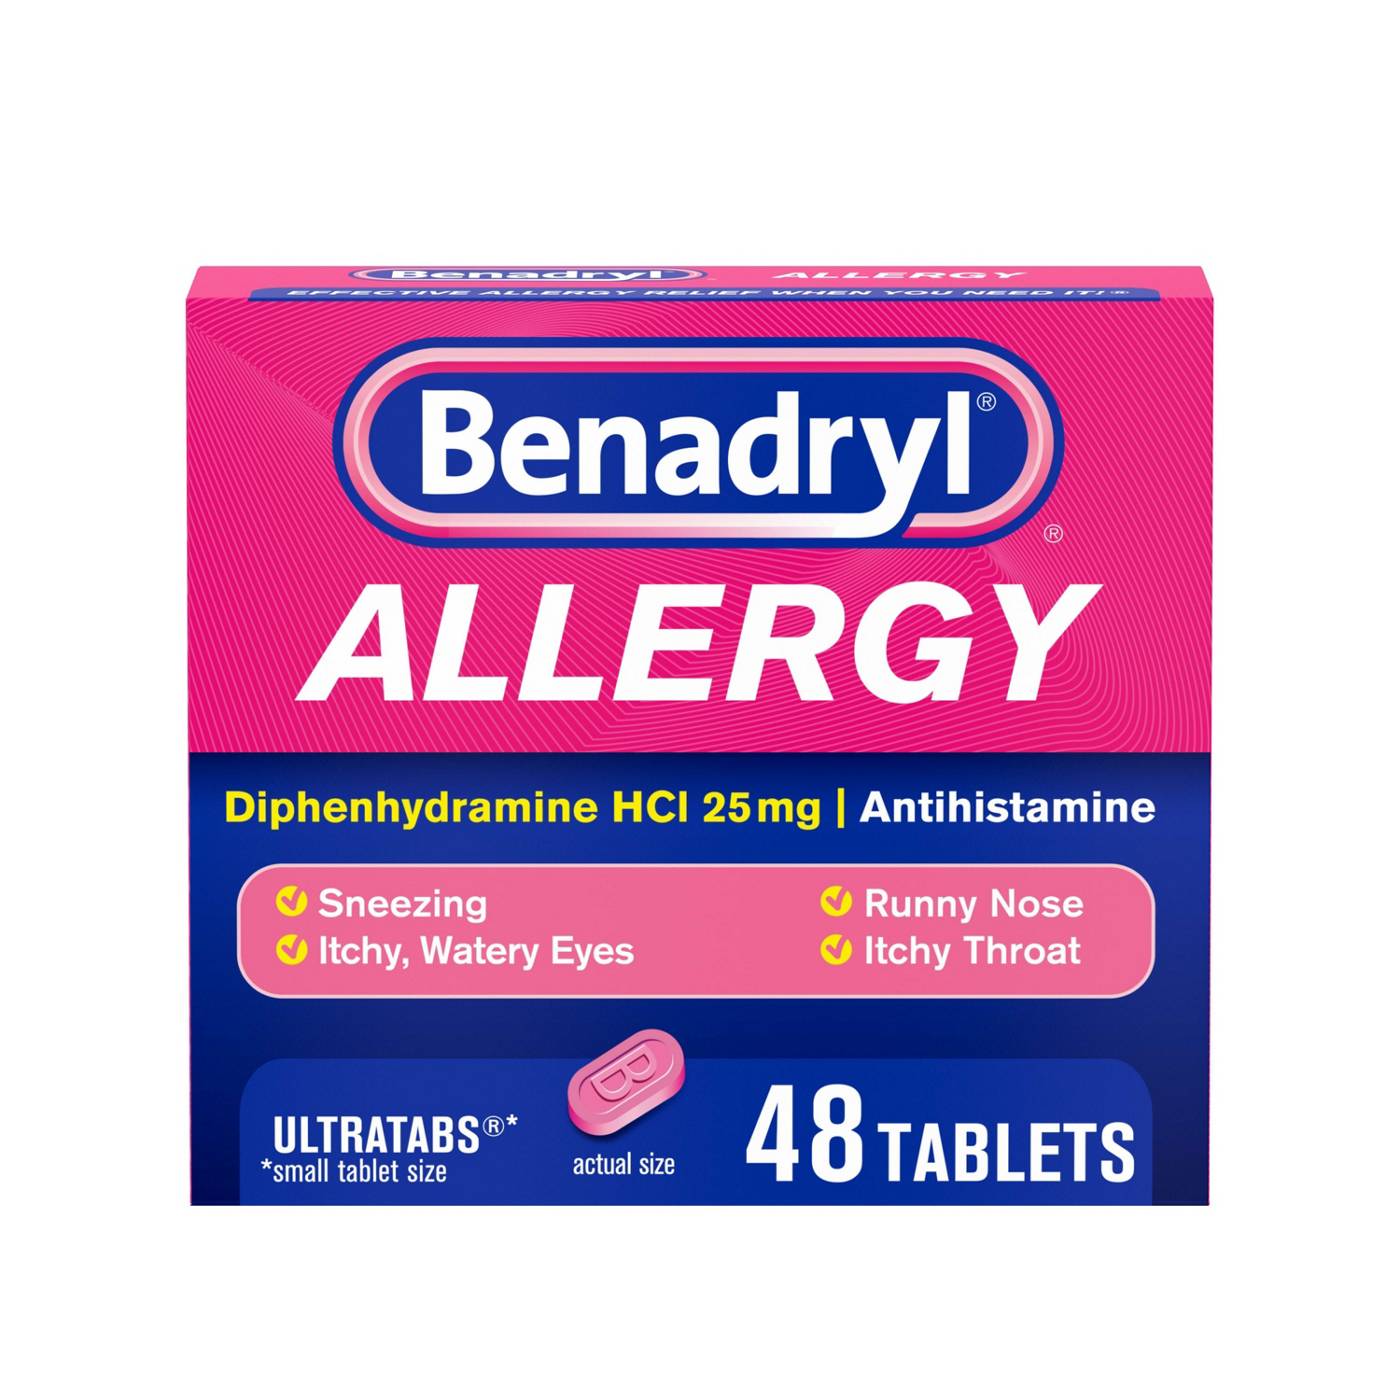 Benadryl Allergy Ultratabs Tablets; image 1 of 3